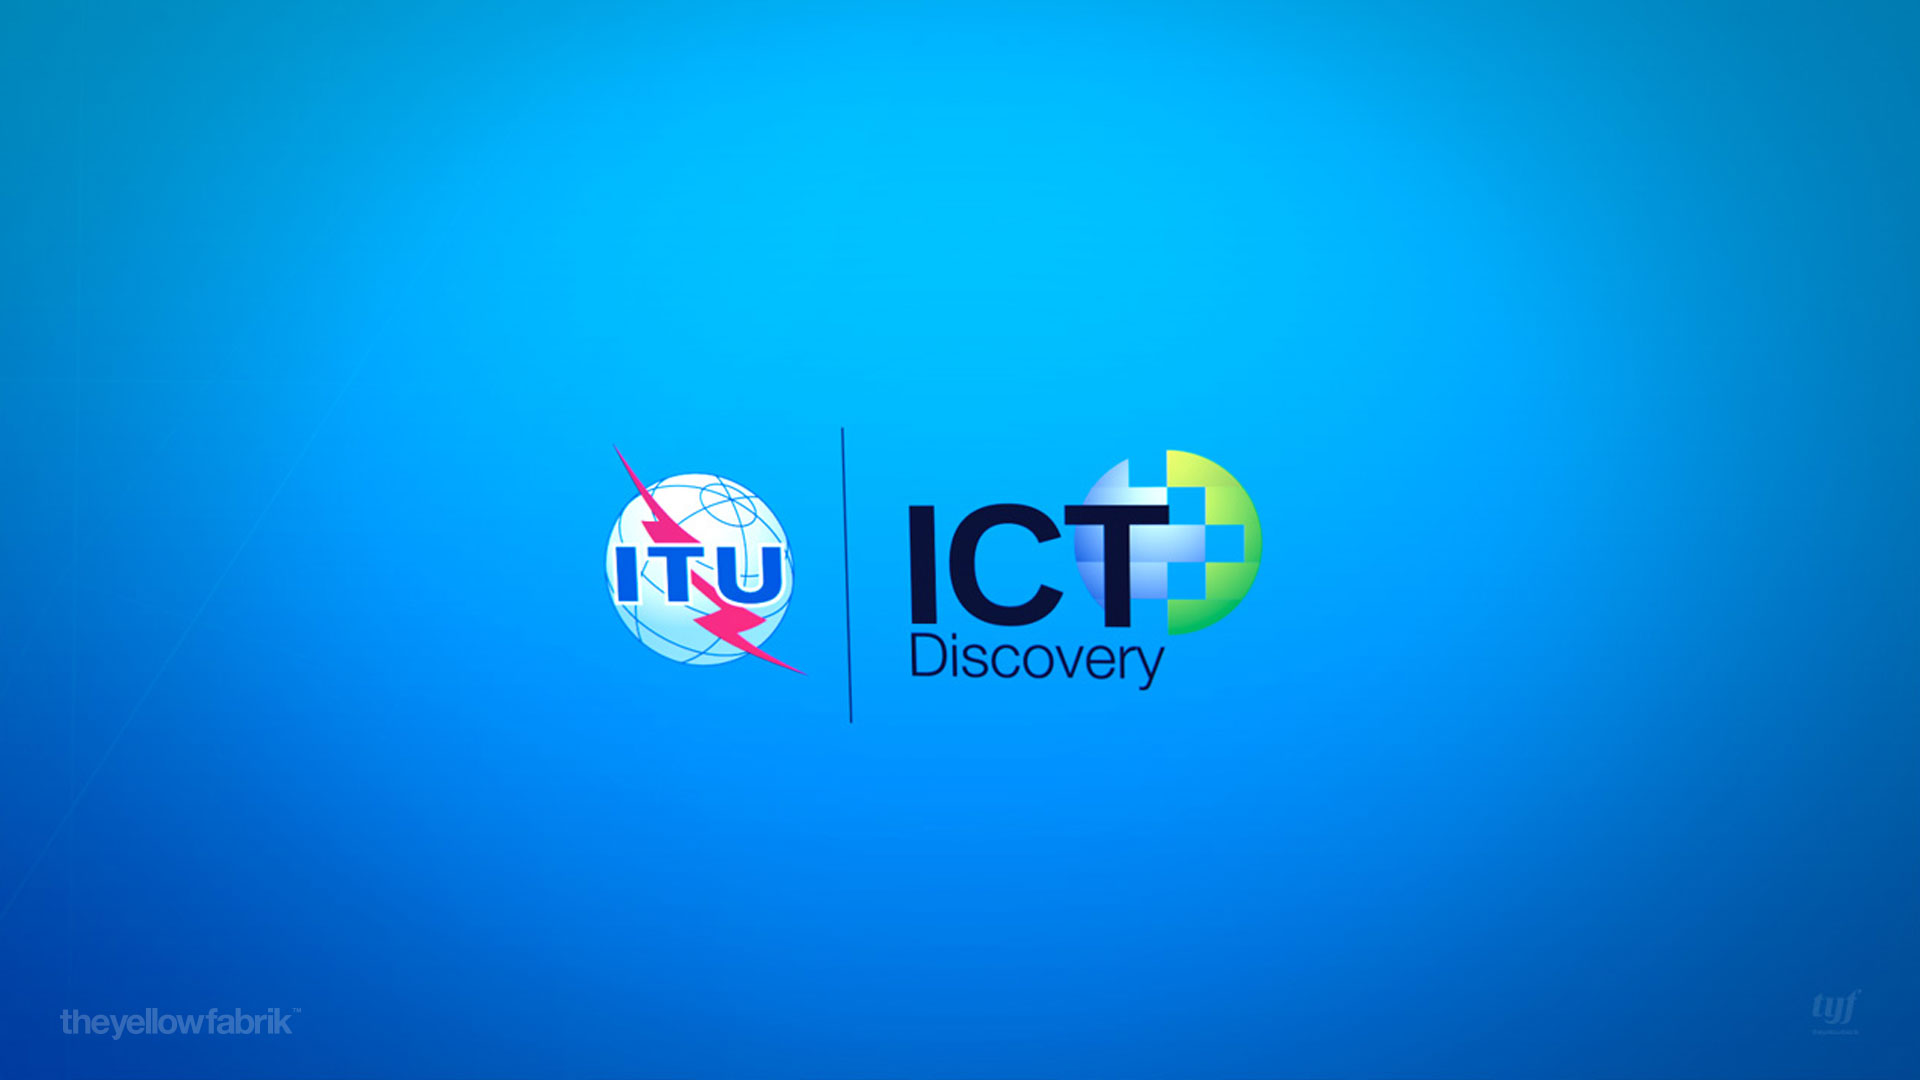 ITU-Introduction